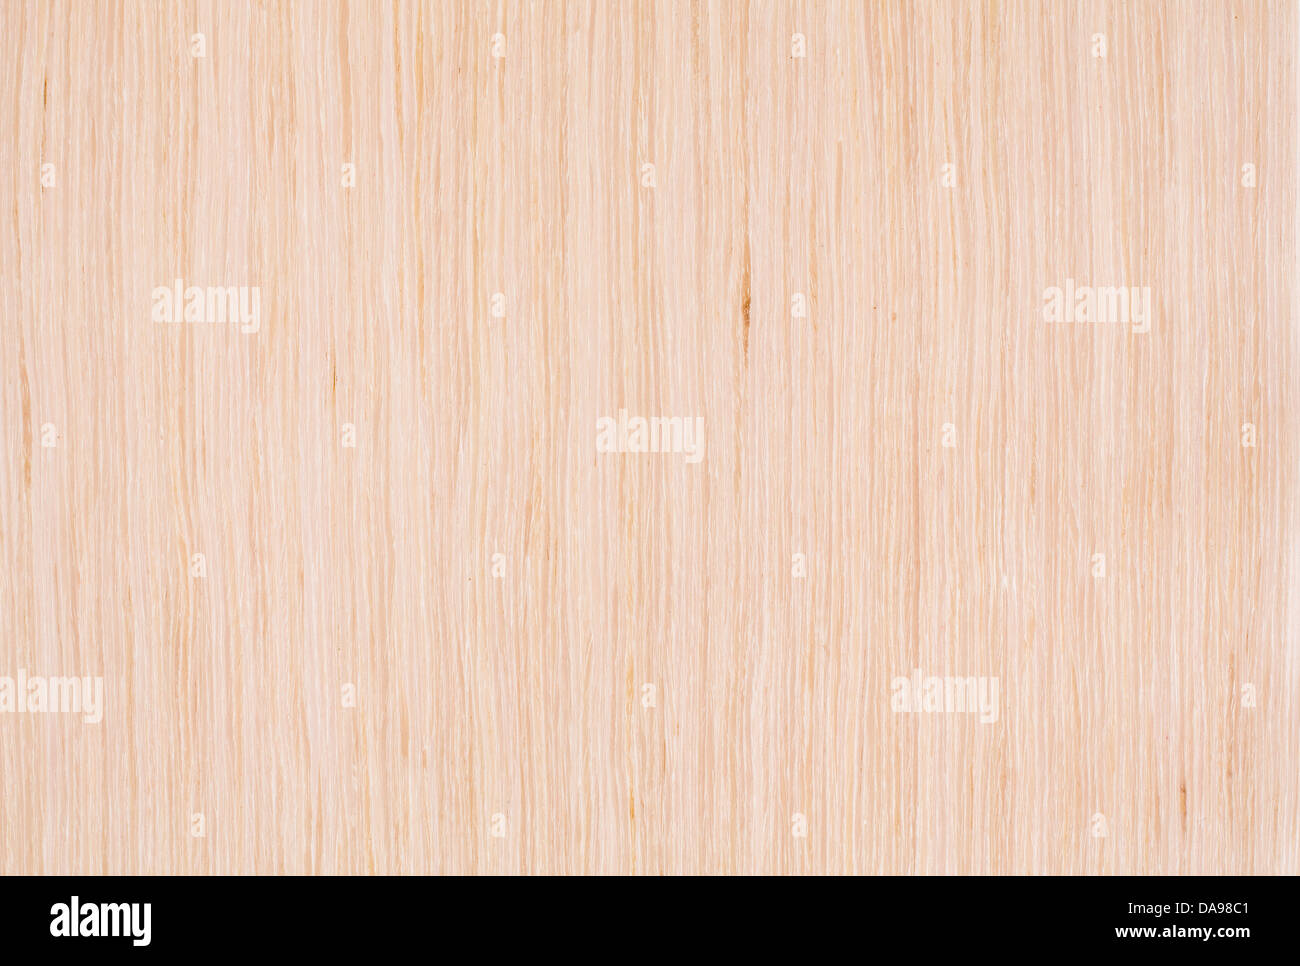 La textura natural de la madera de roble blanqueada Foto de stock